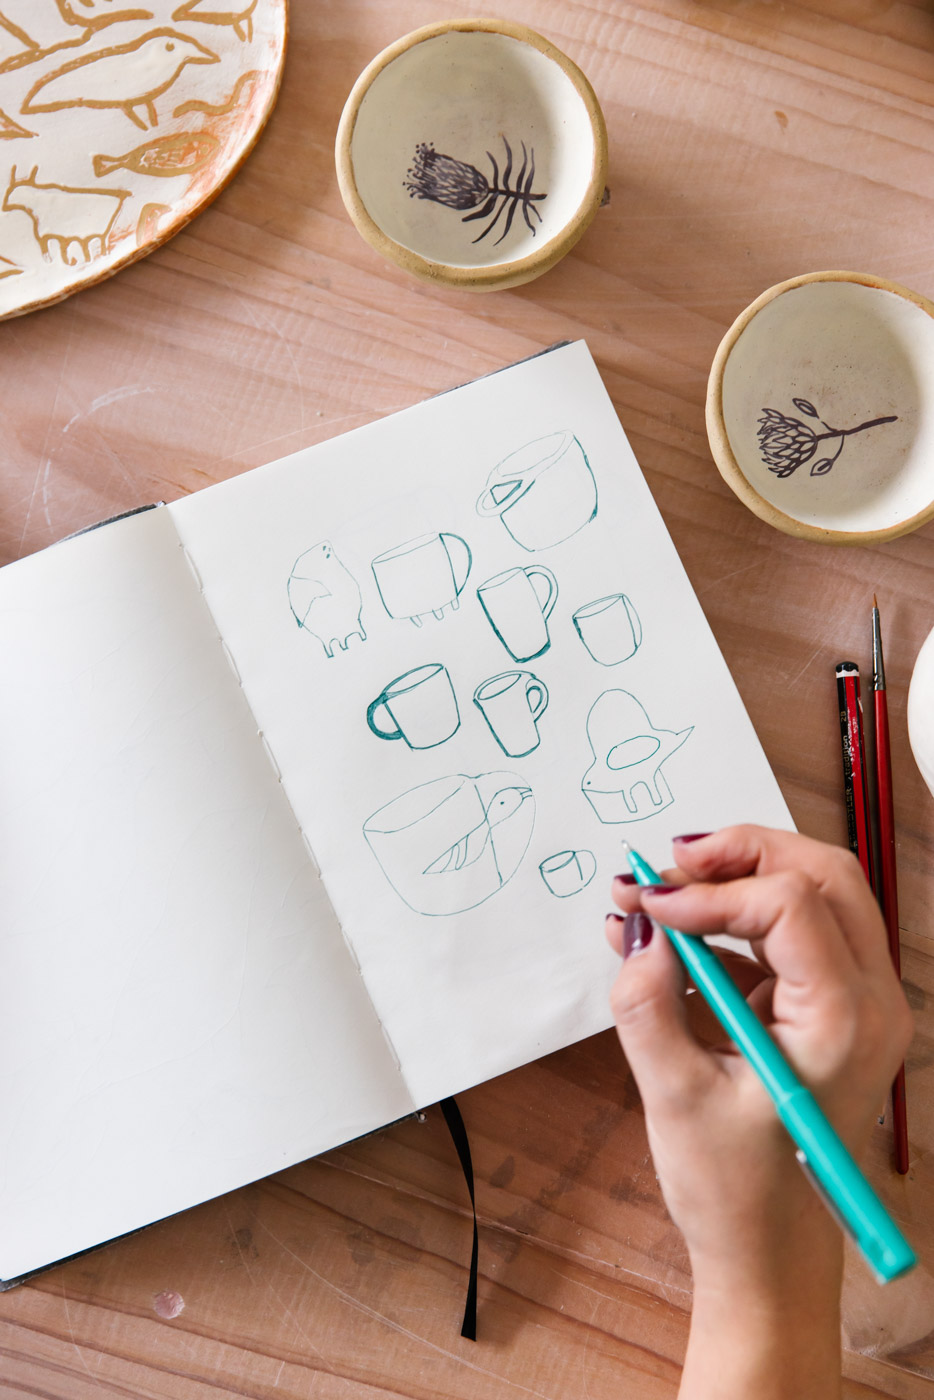 Ceramic artist illustrates ideas in a notebook